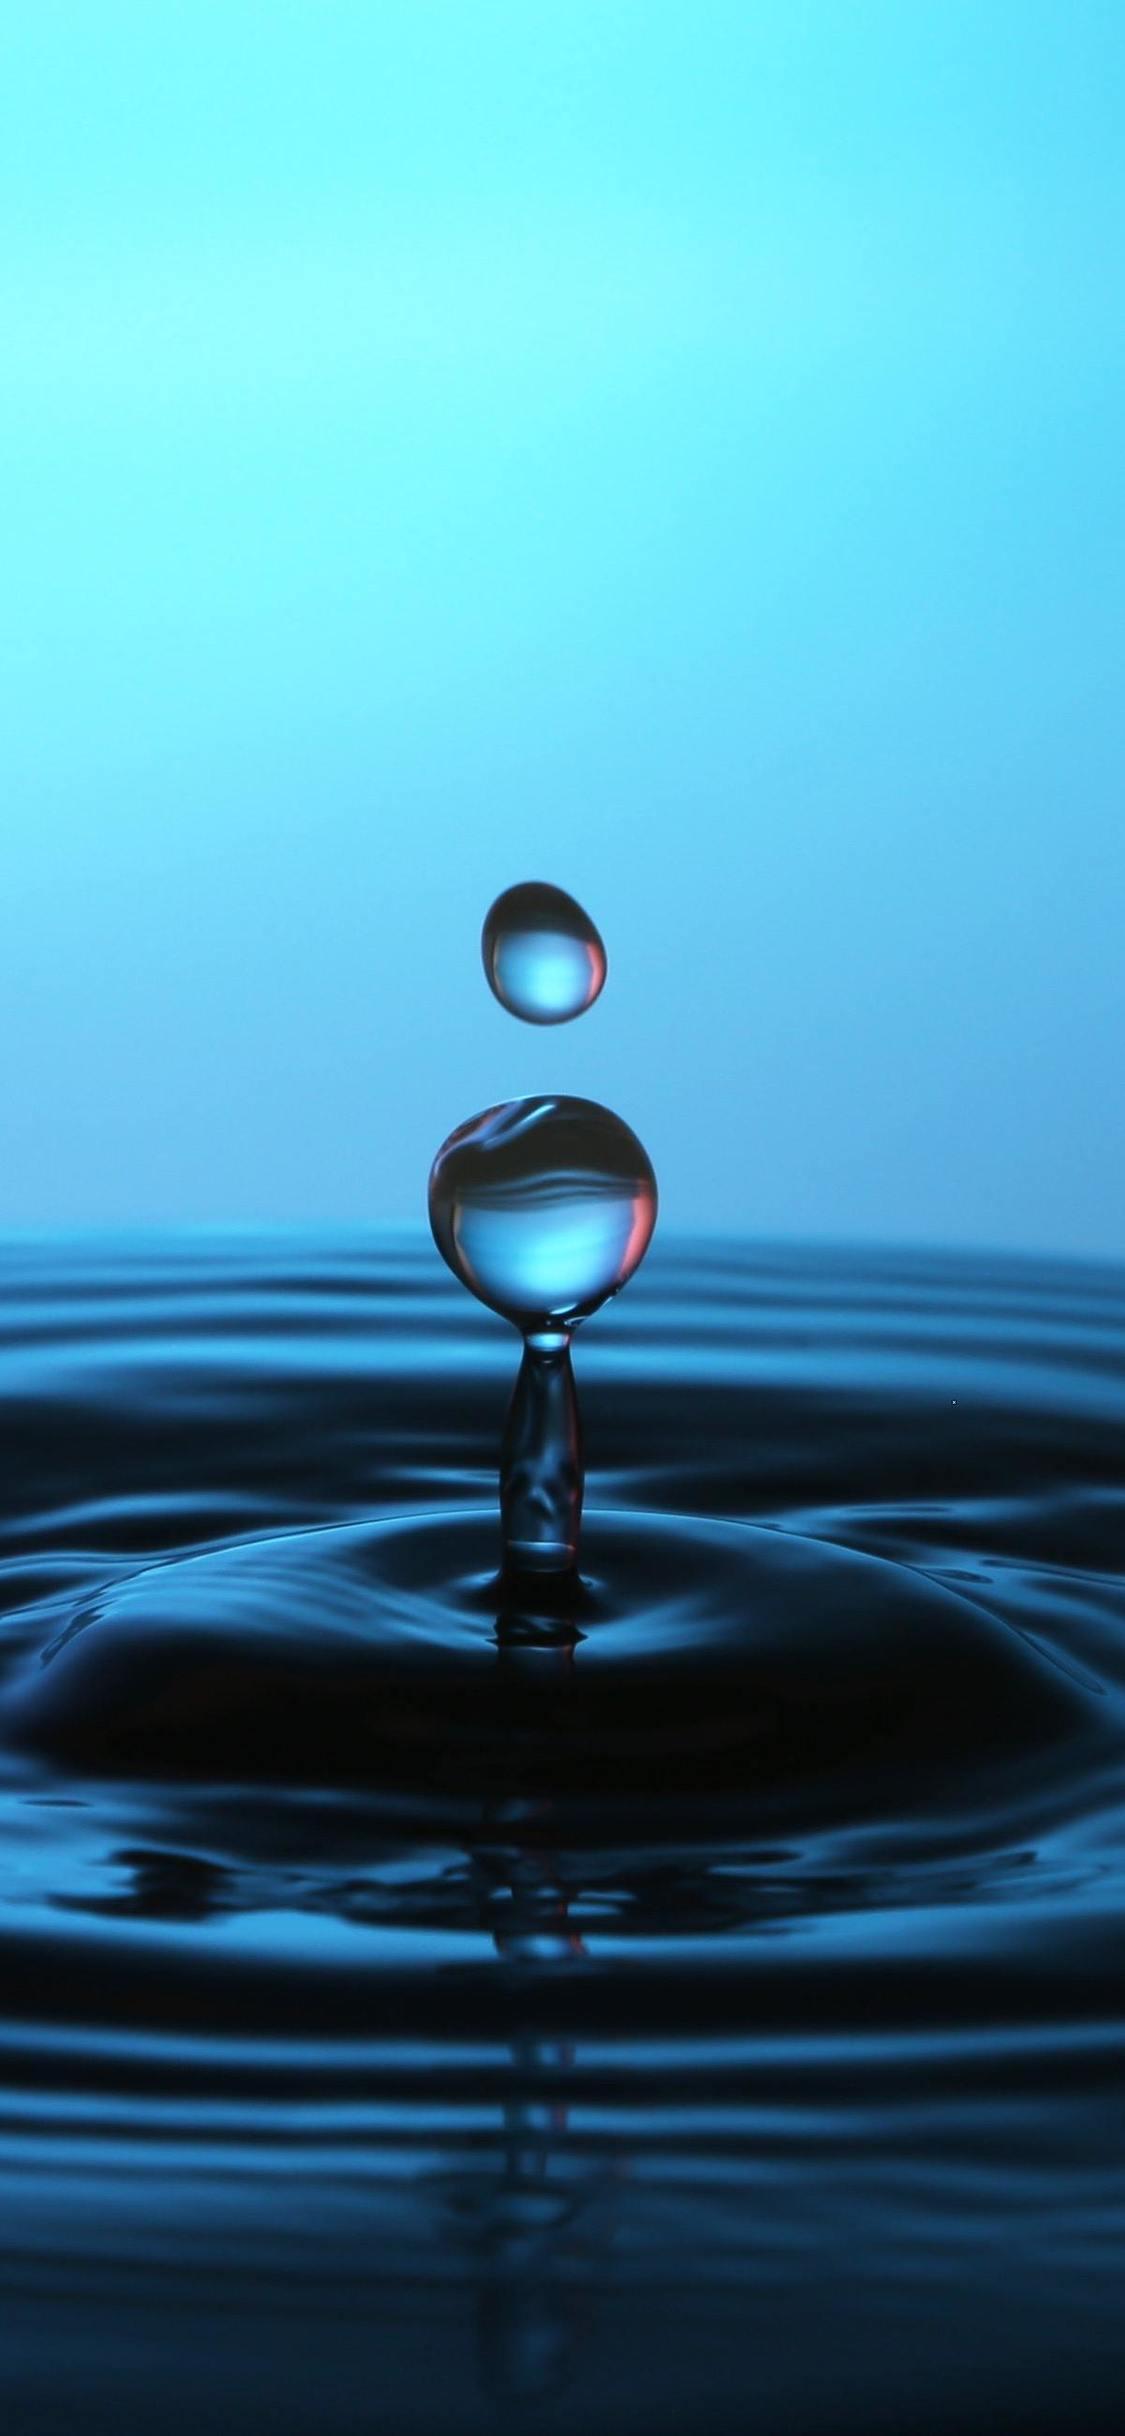 Water Drop Closeup Macro 4k iPhone XS, iPhone 10